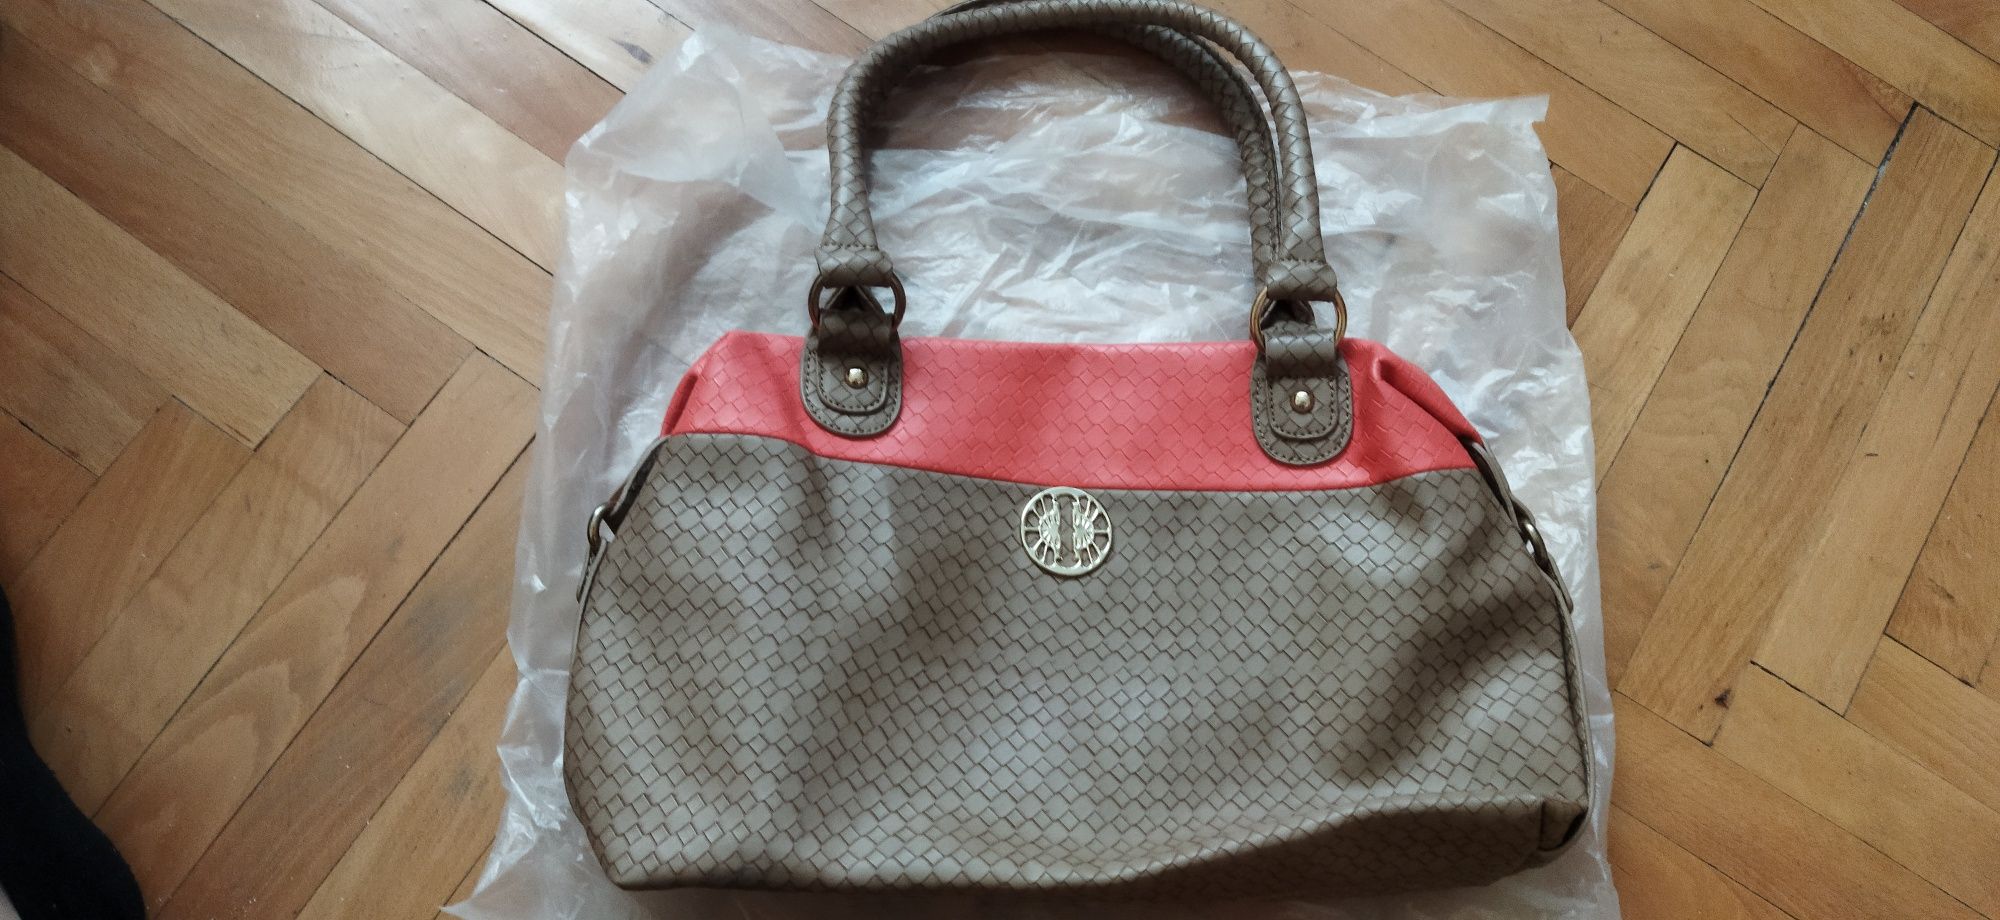 Нова чанта от Avon